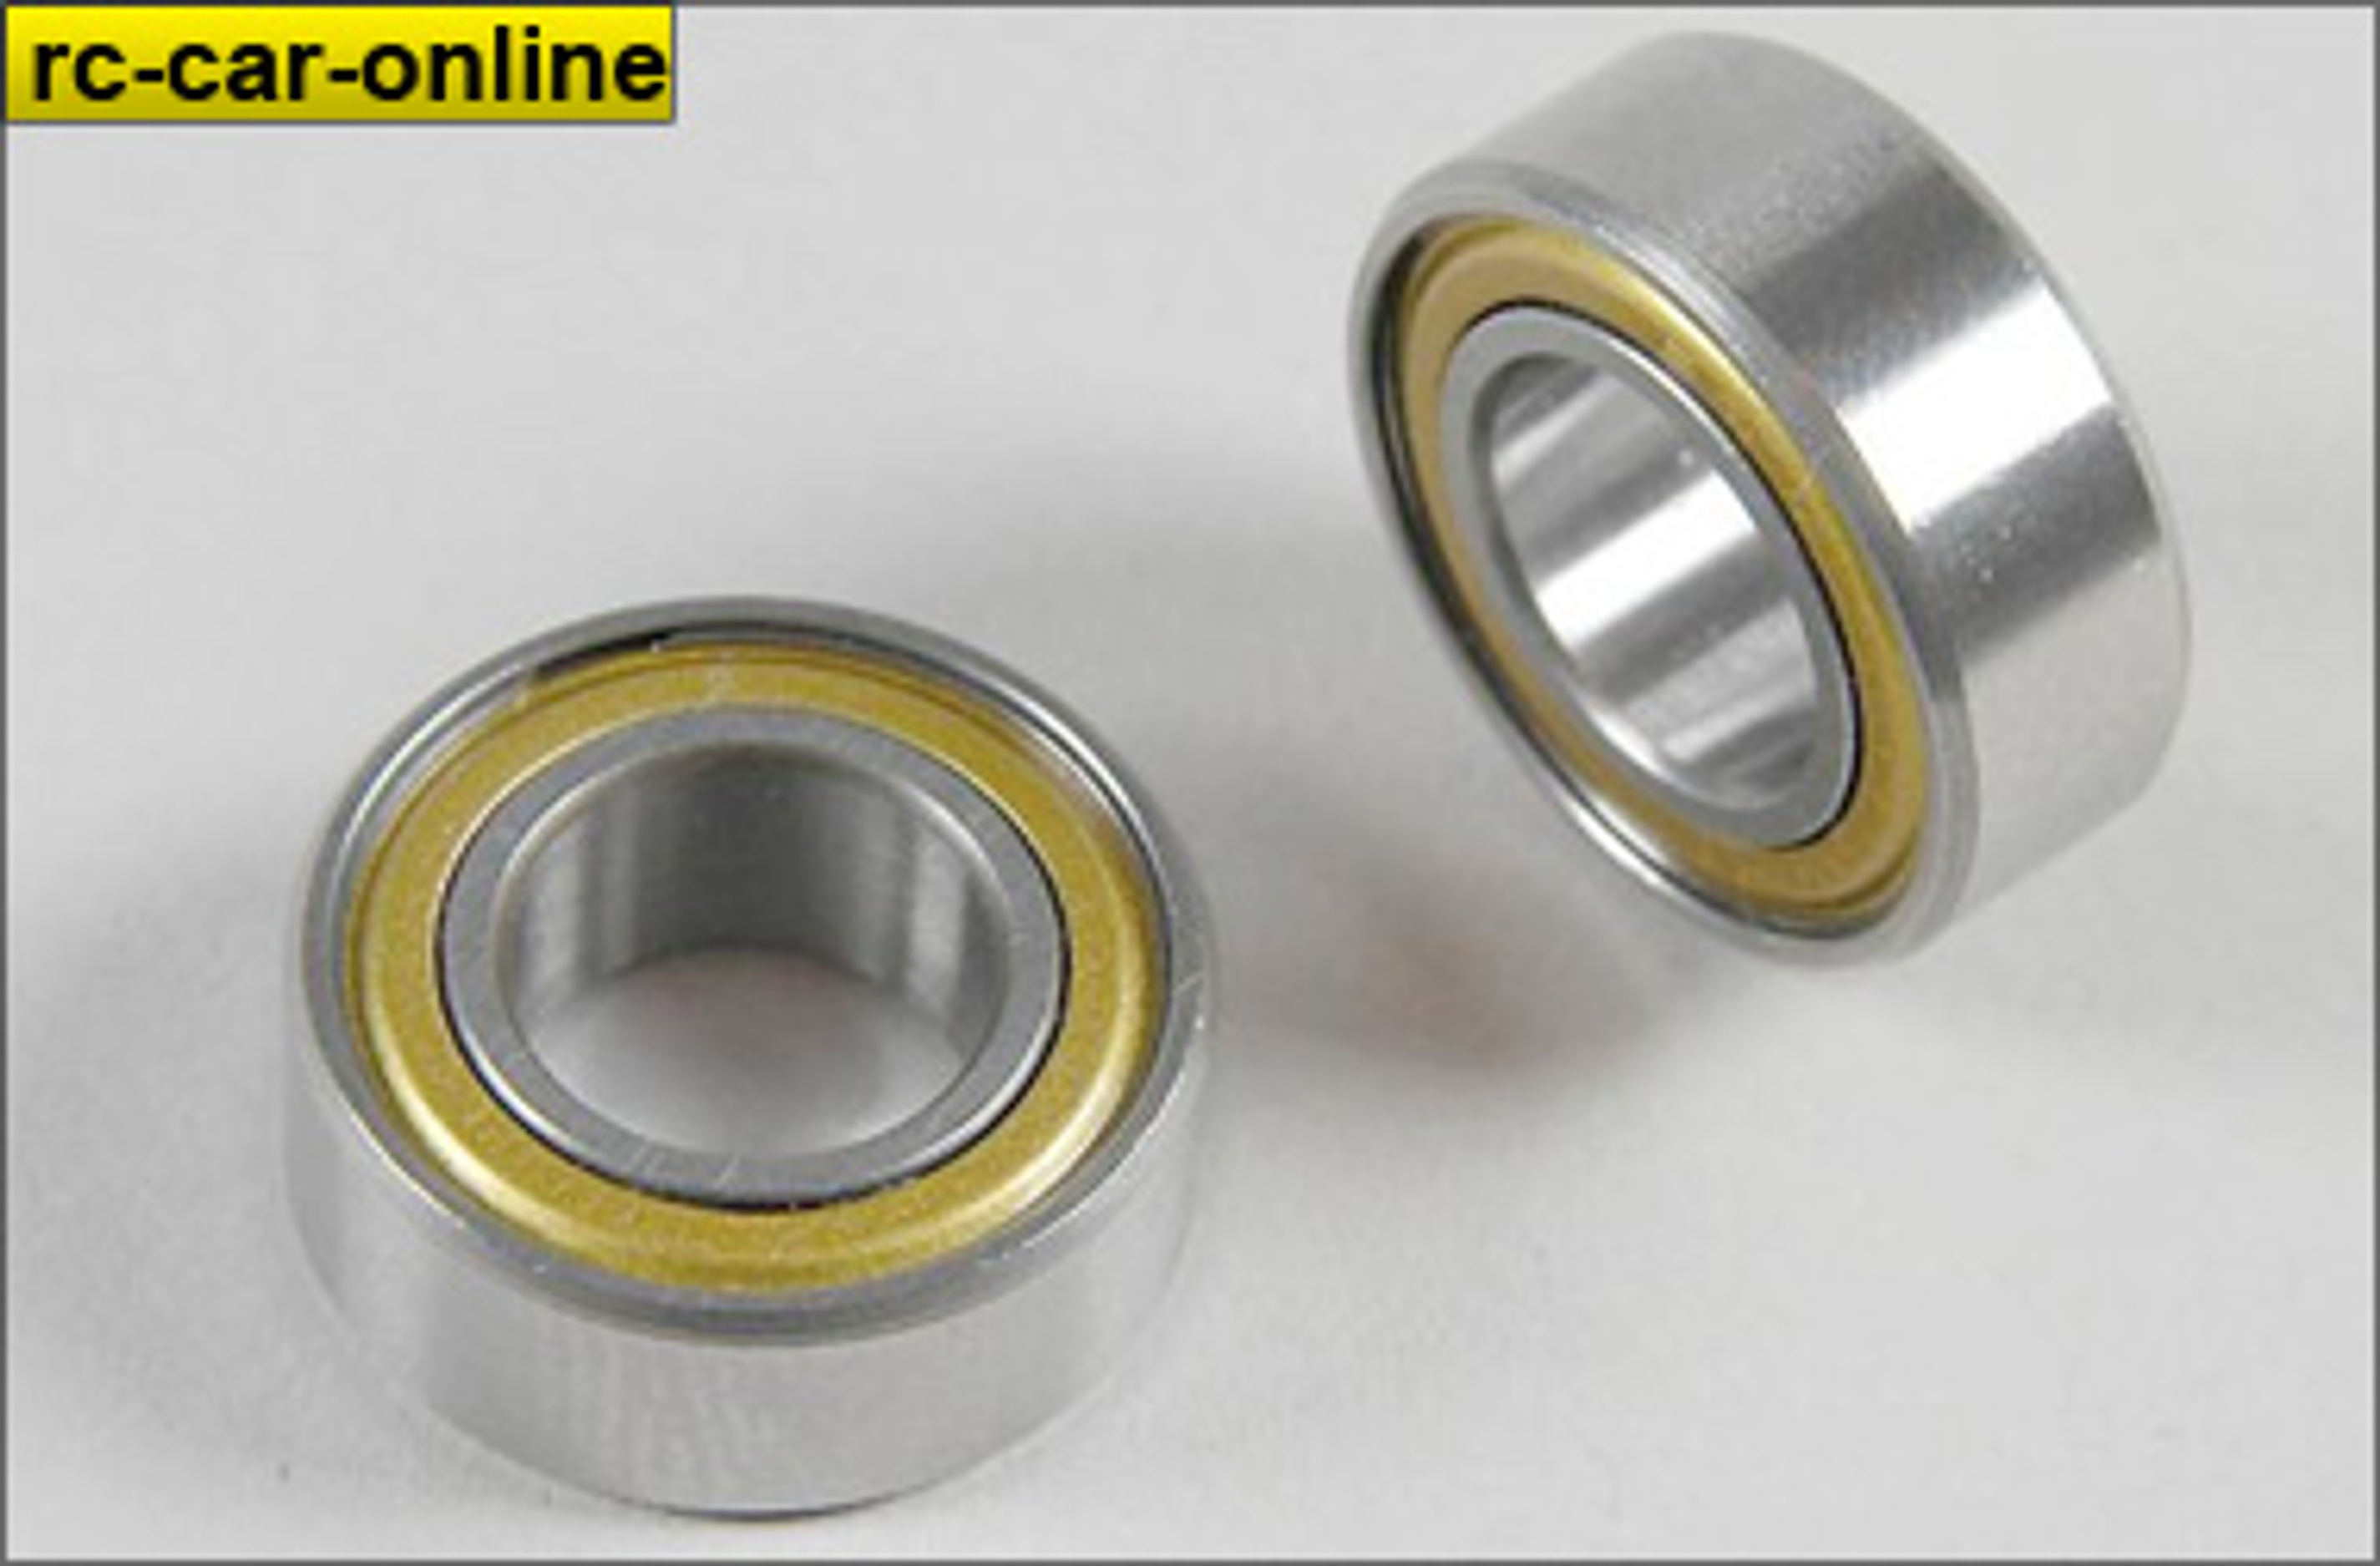 6036/05 FG bearing set 10x19x7 with grease filling - 2 pcs